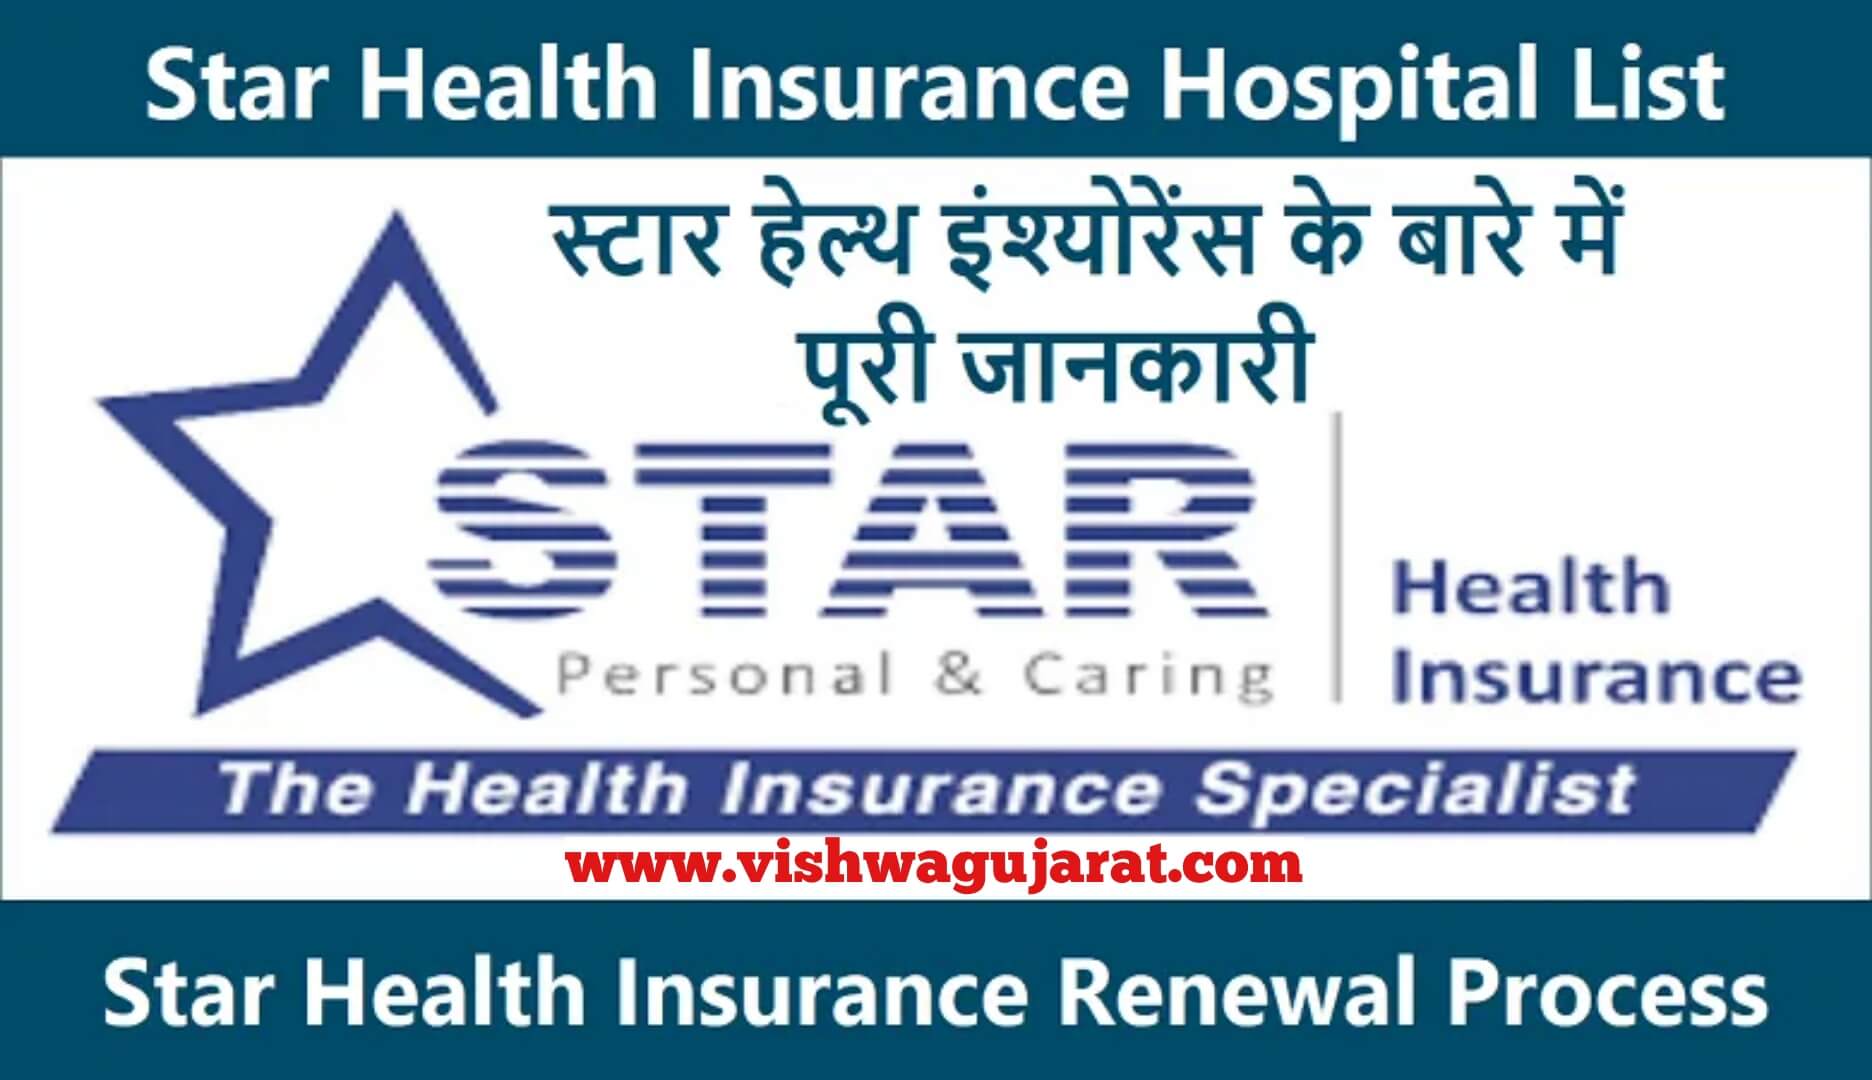 Star Health Insurance Hospital List